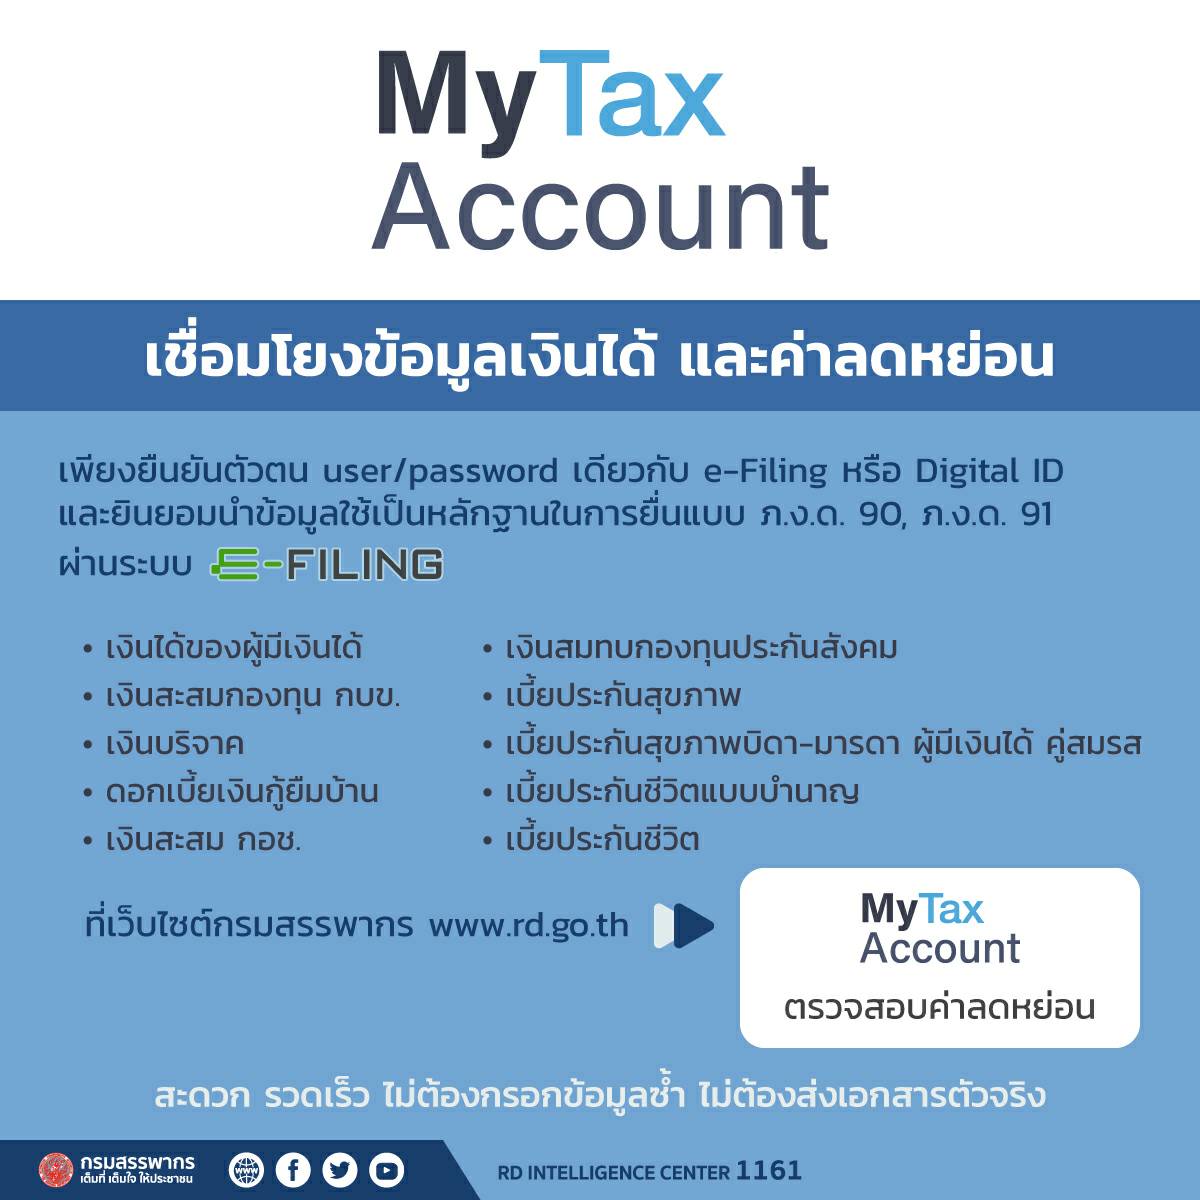 My Tax Account เชื่อมโยงข้อมูลรายได้ ค่าลดหย่อนทั้งหน่วยงานรัฐและเอกชน  ยื่นแบบ ภ.ง.ด.90/91 ผ่าน e-Filing สะดวก ไม่ต้องกรอกข้อมูลซ้ำ